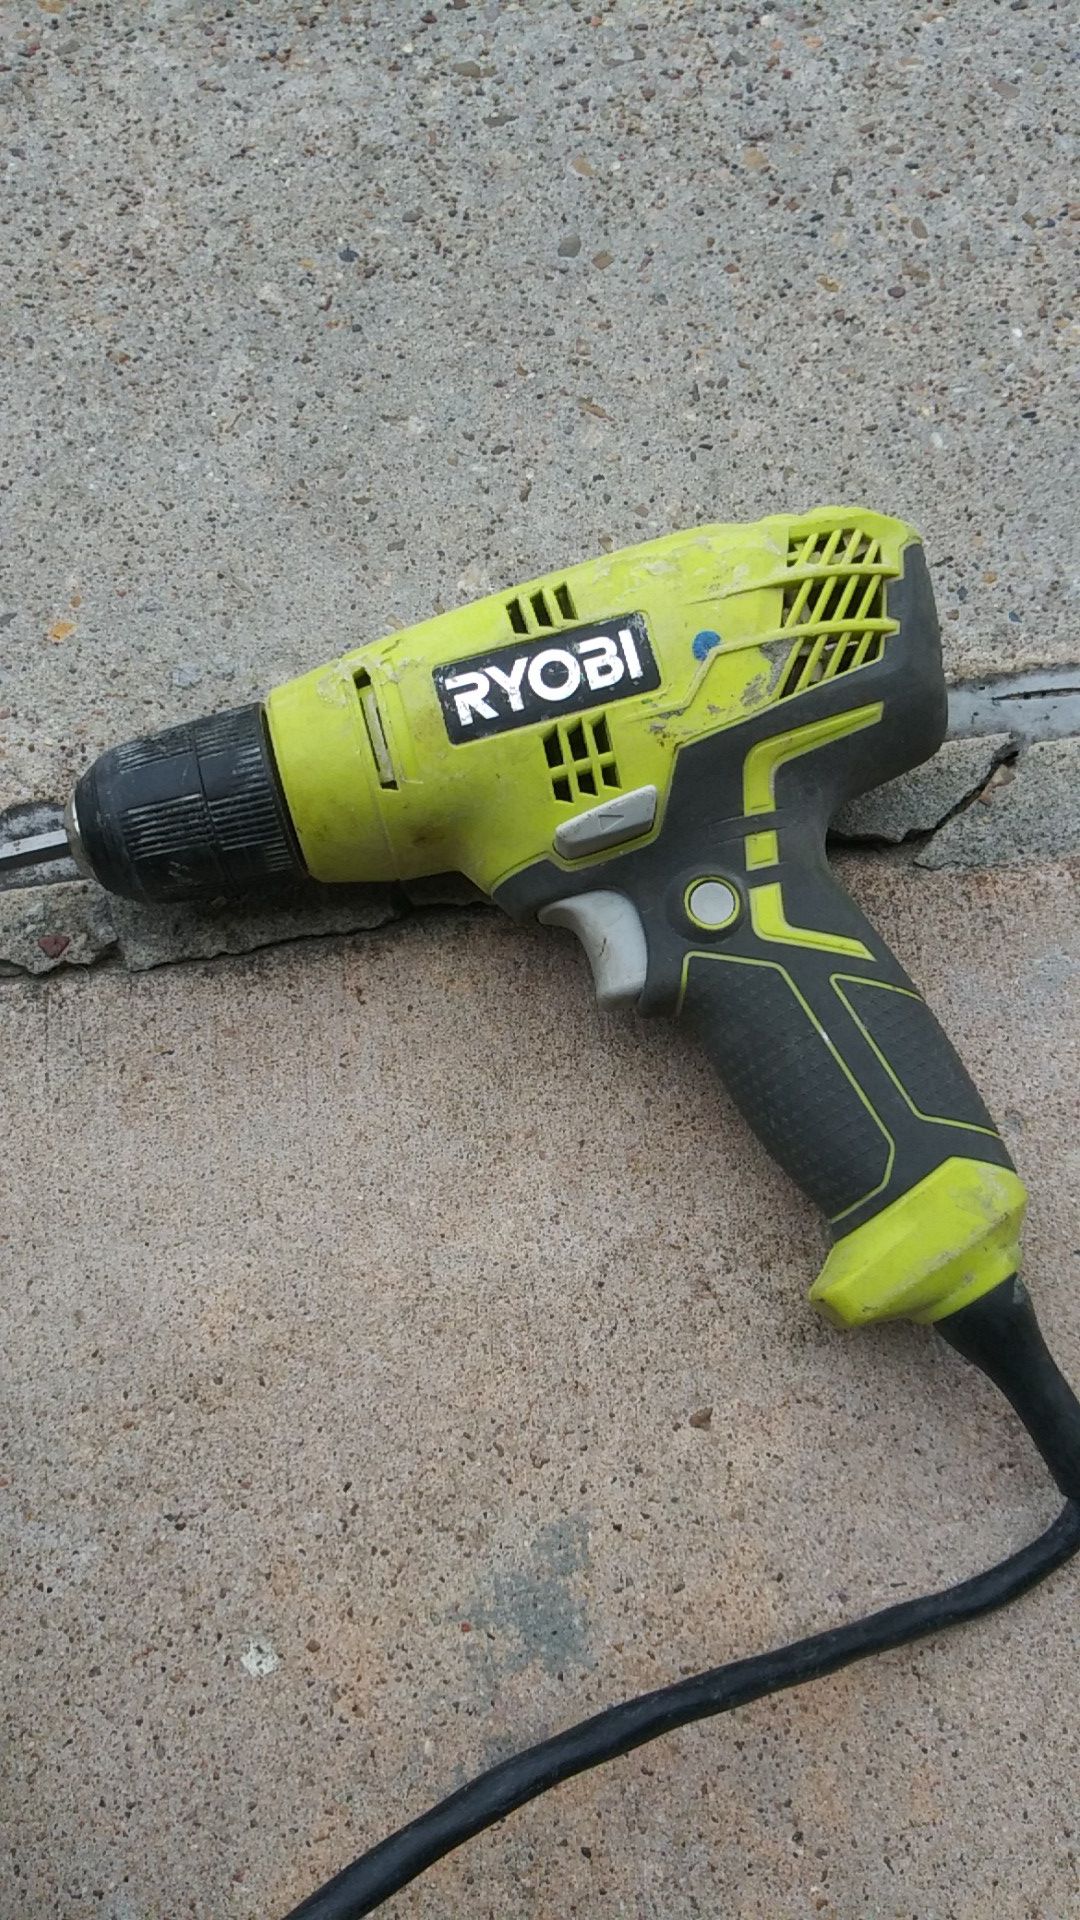 Ryobi power drill..with cord